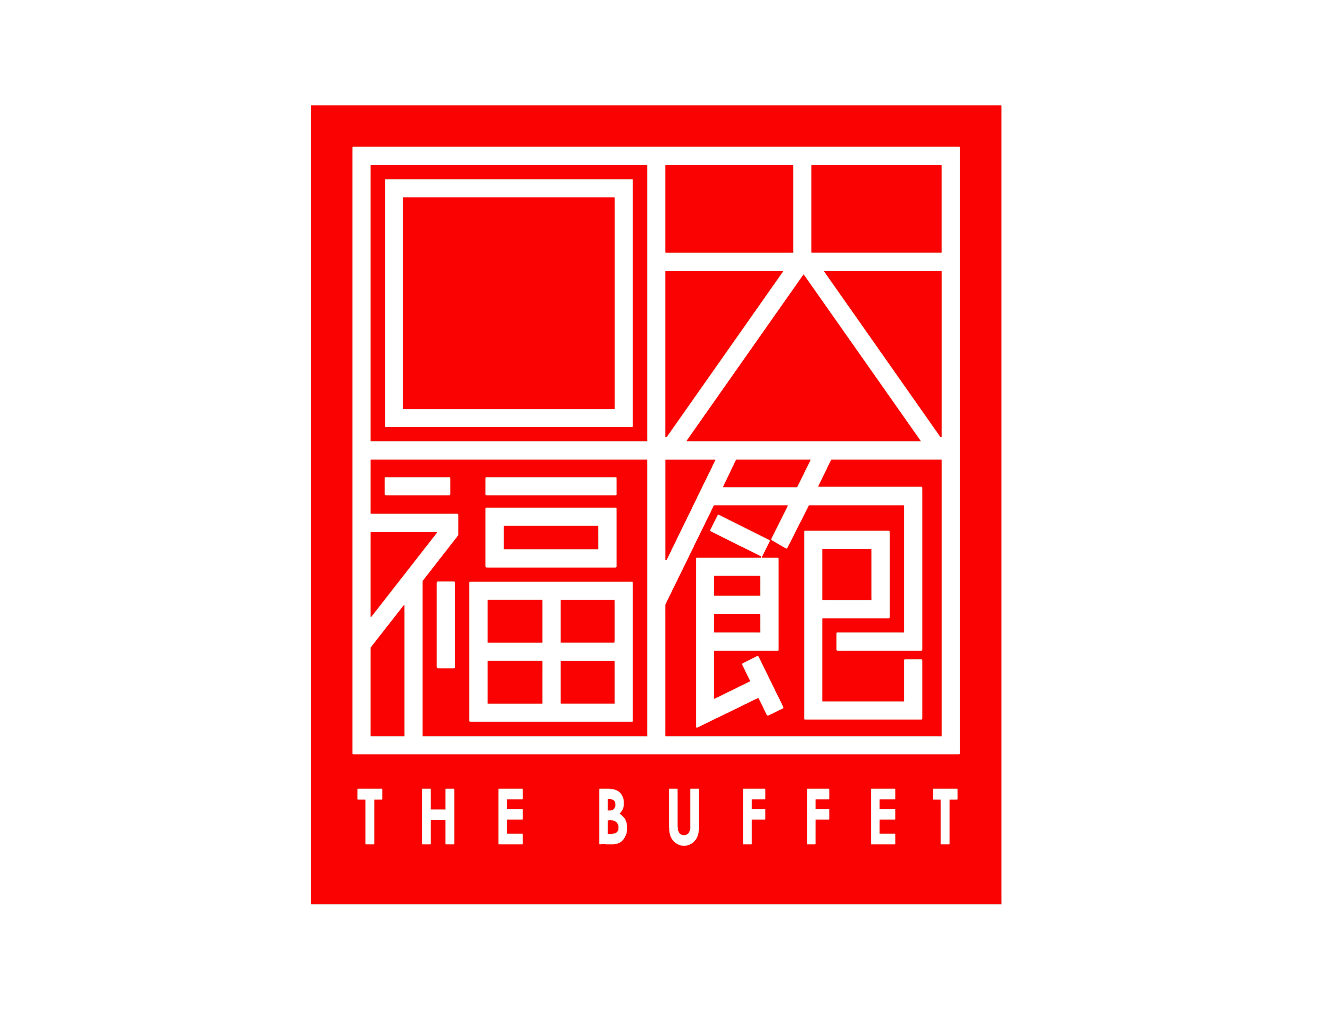 Bffet Logo - Home